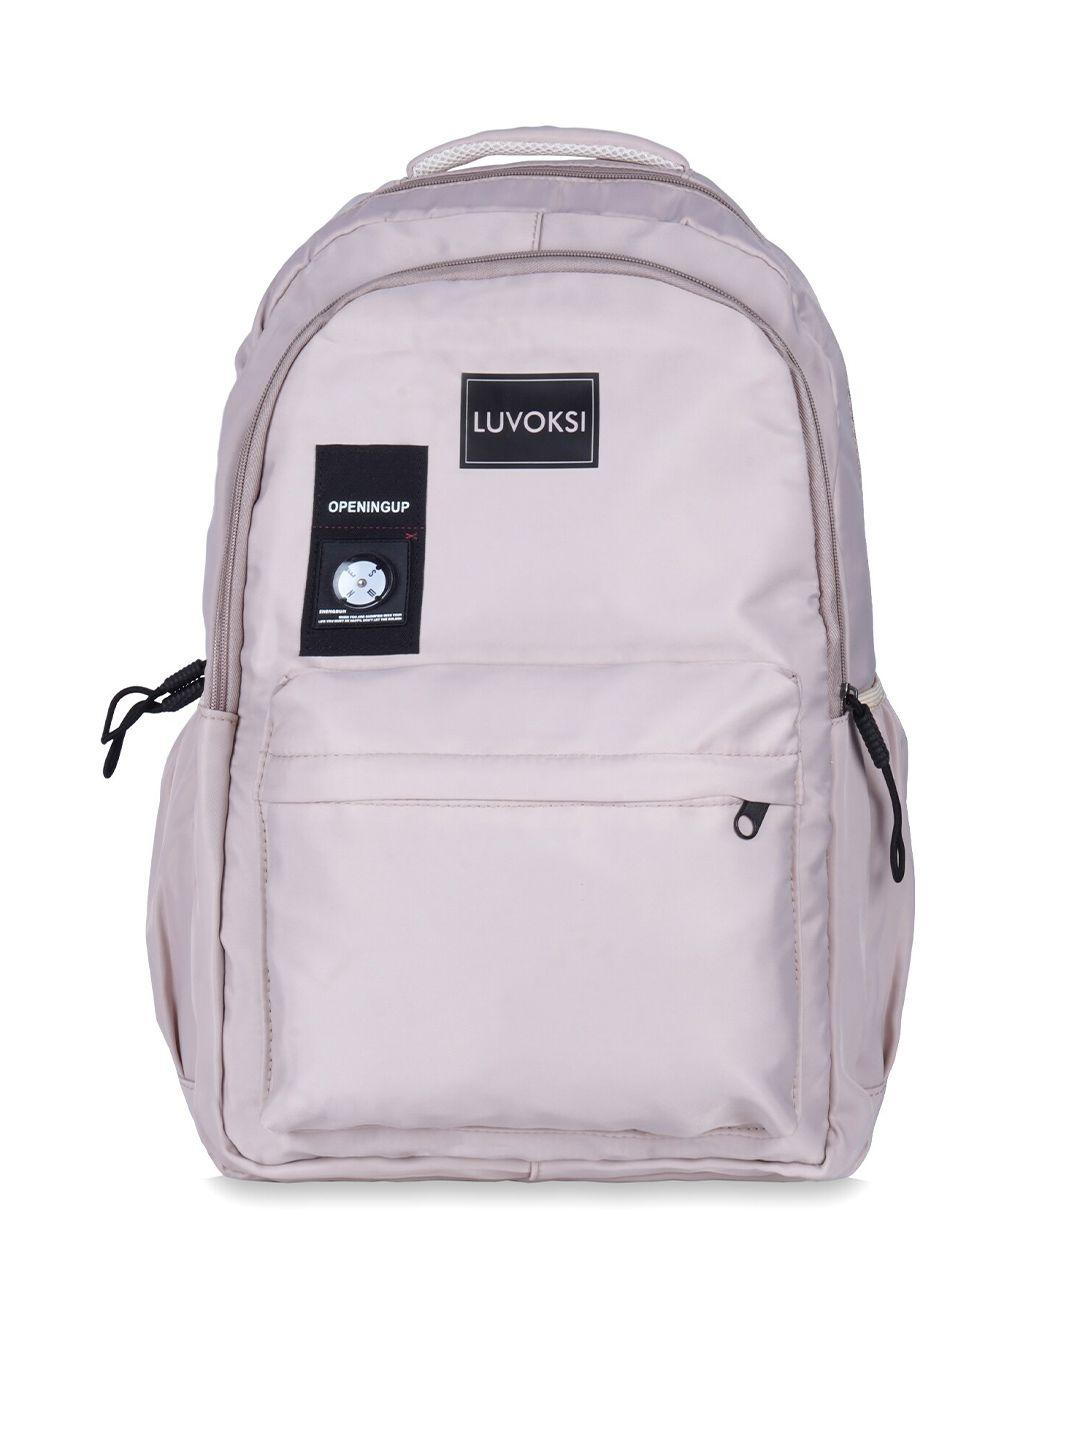 luvoksi women brand logo water resistant backpack